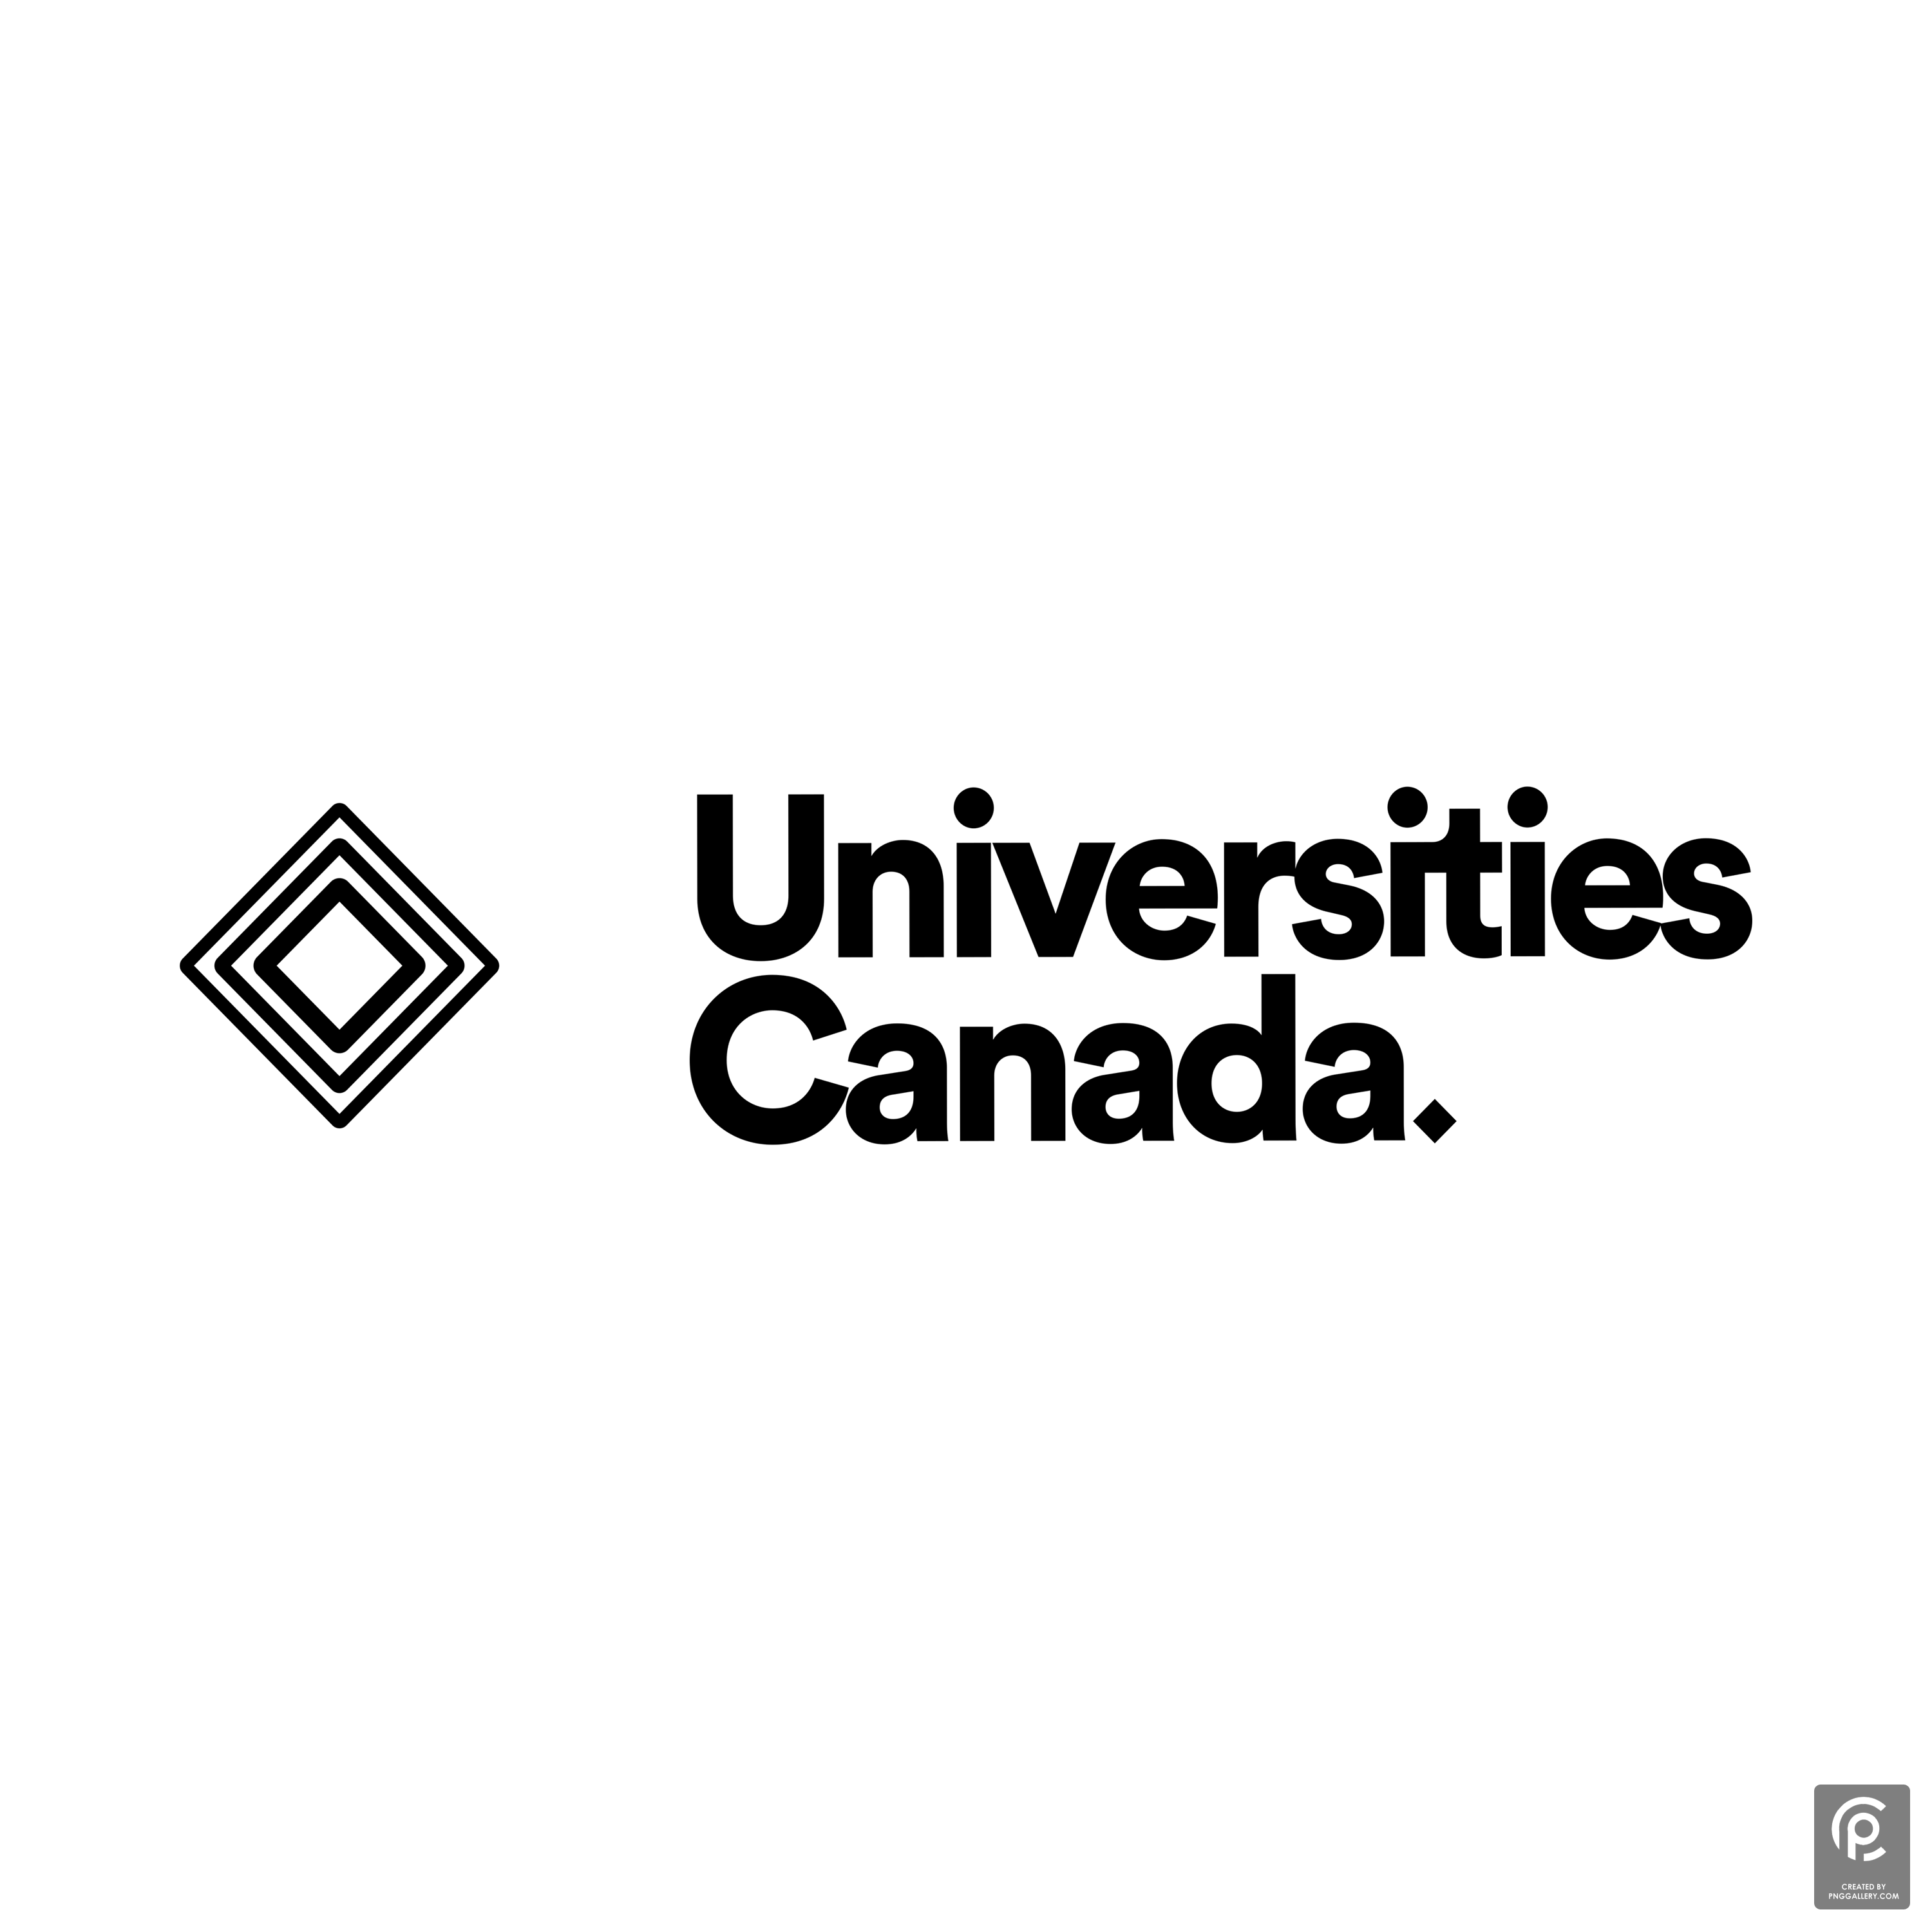 Universities Canada logo Transparent Gallery